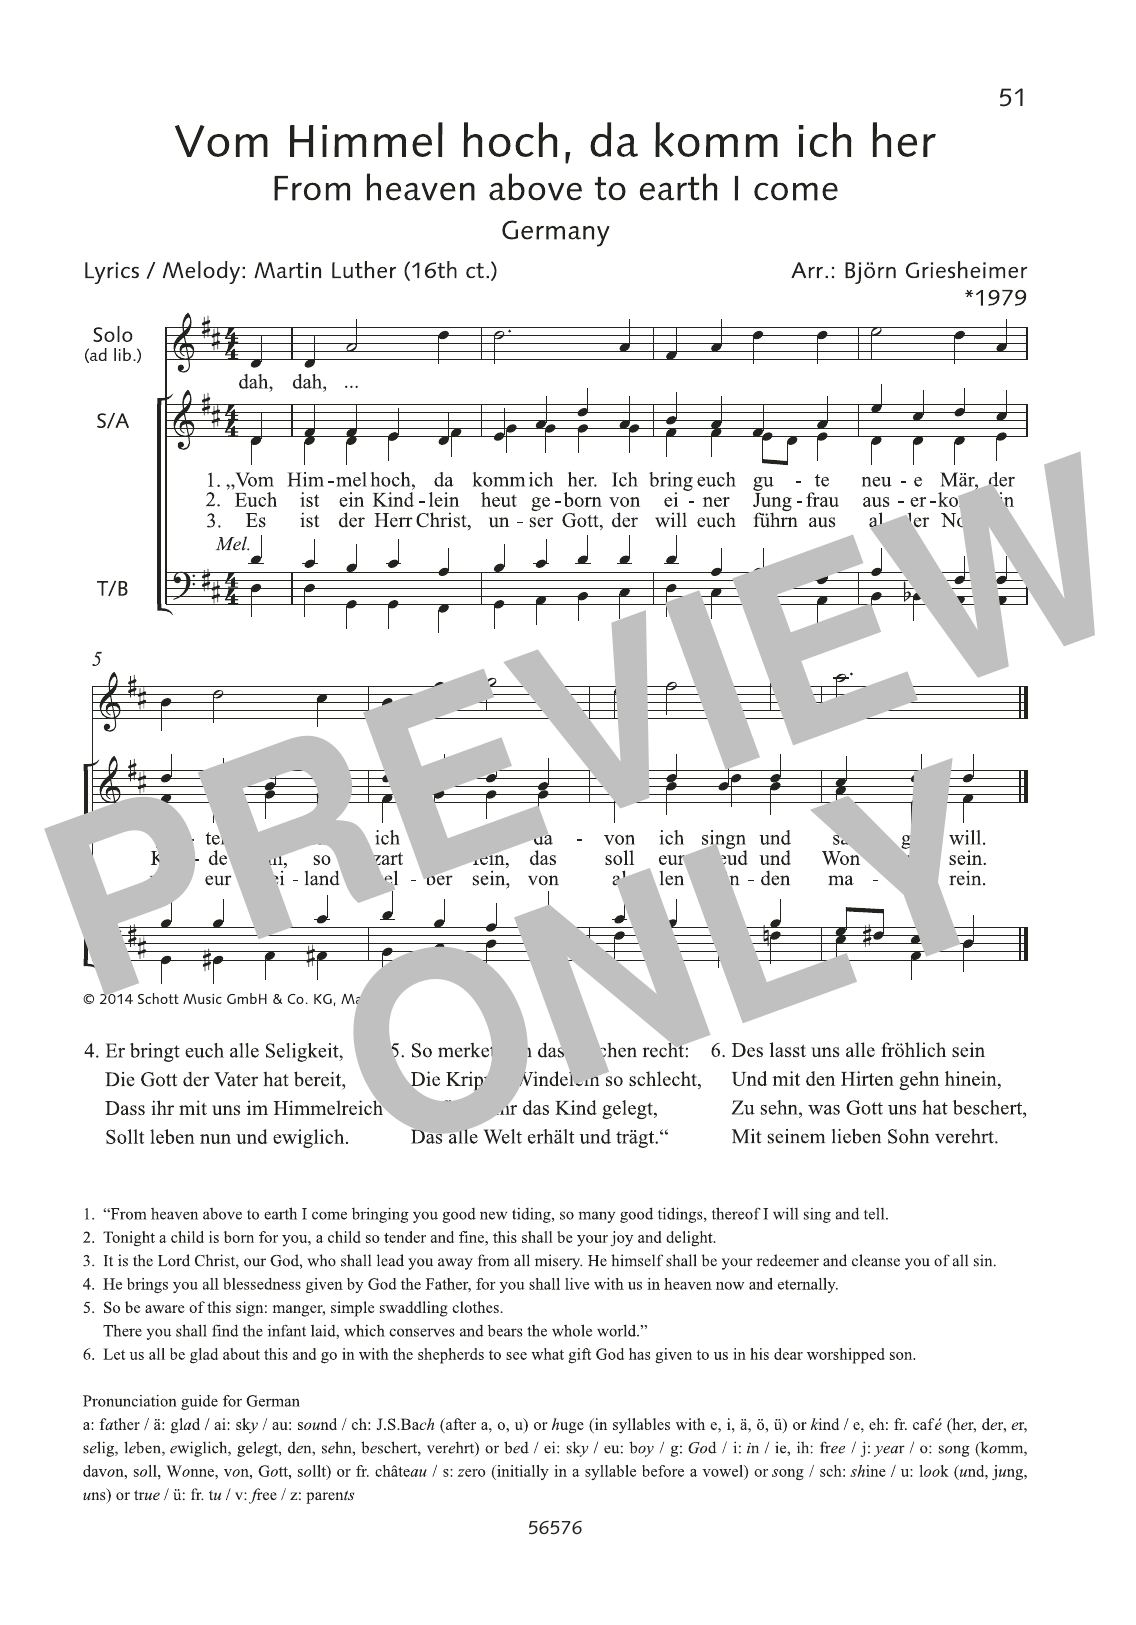 Martin Luther Vom Himmel hoch, da komm ich her Sheet Music Notes & Chords for Choral - Download or Print PDF